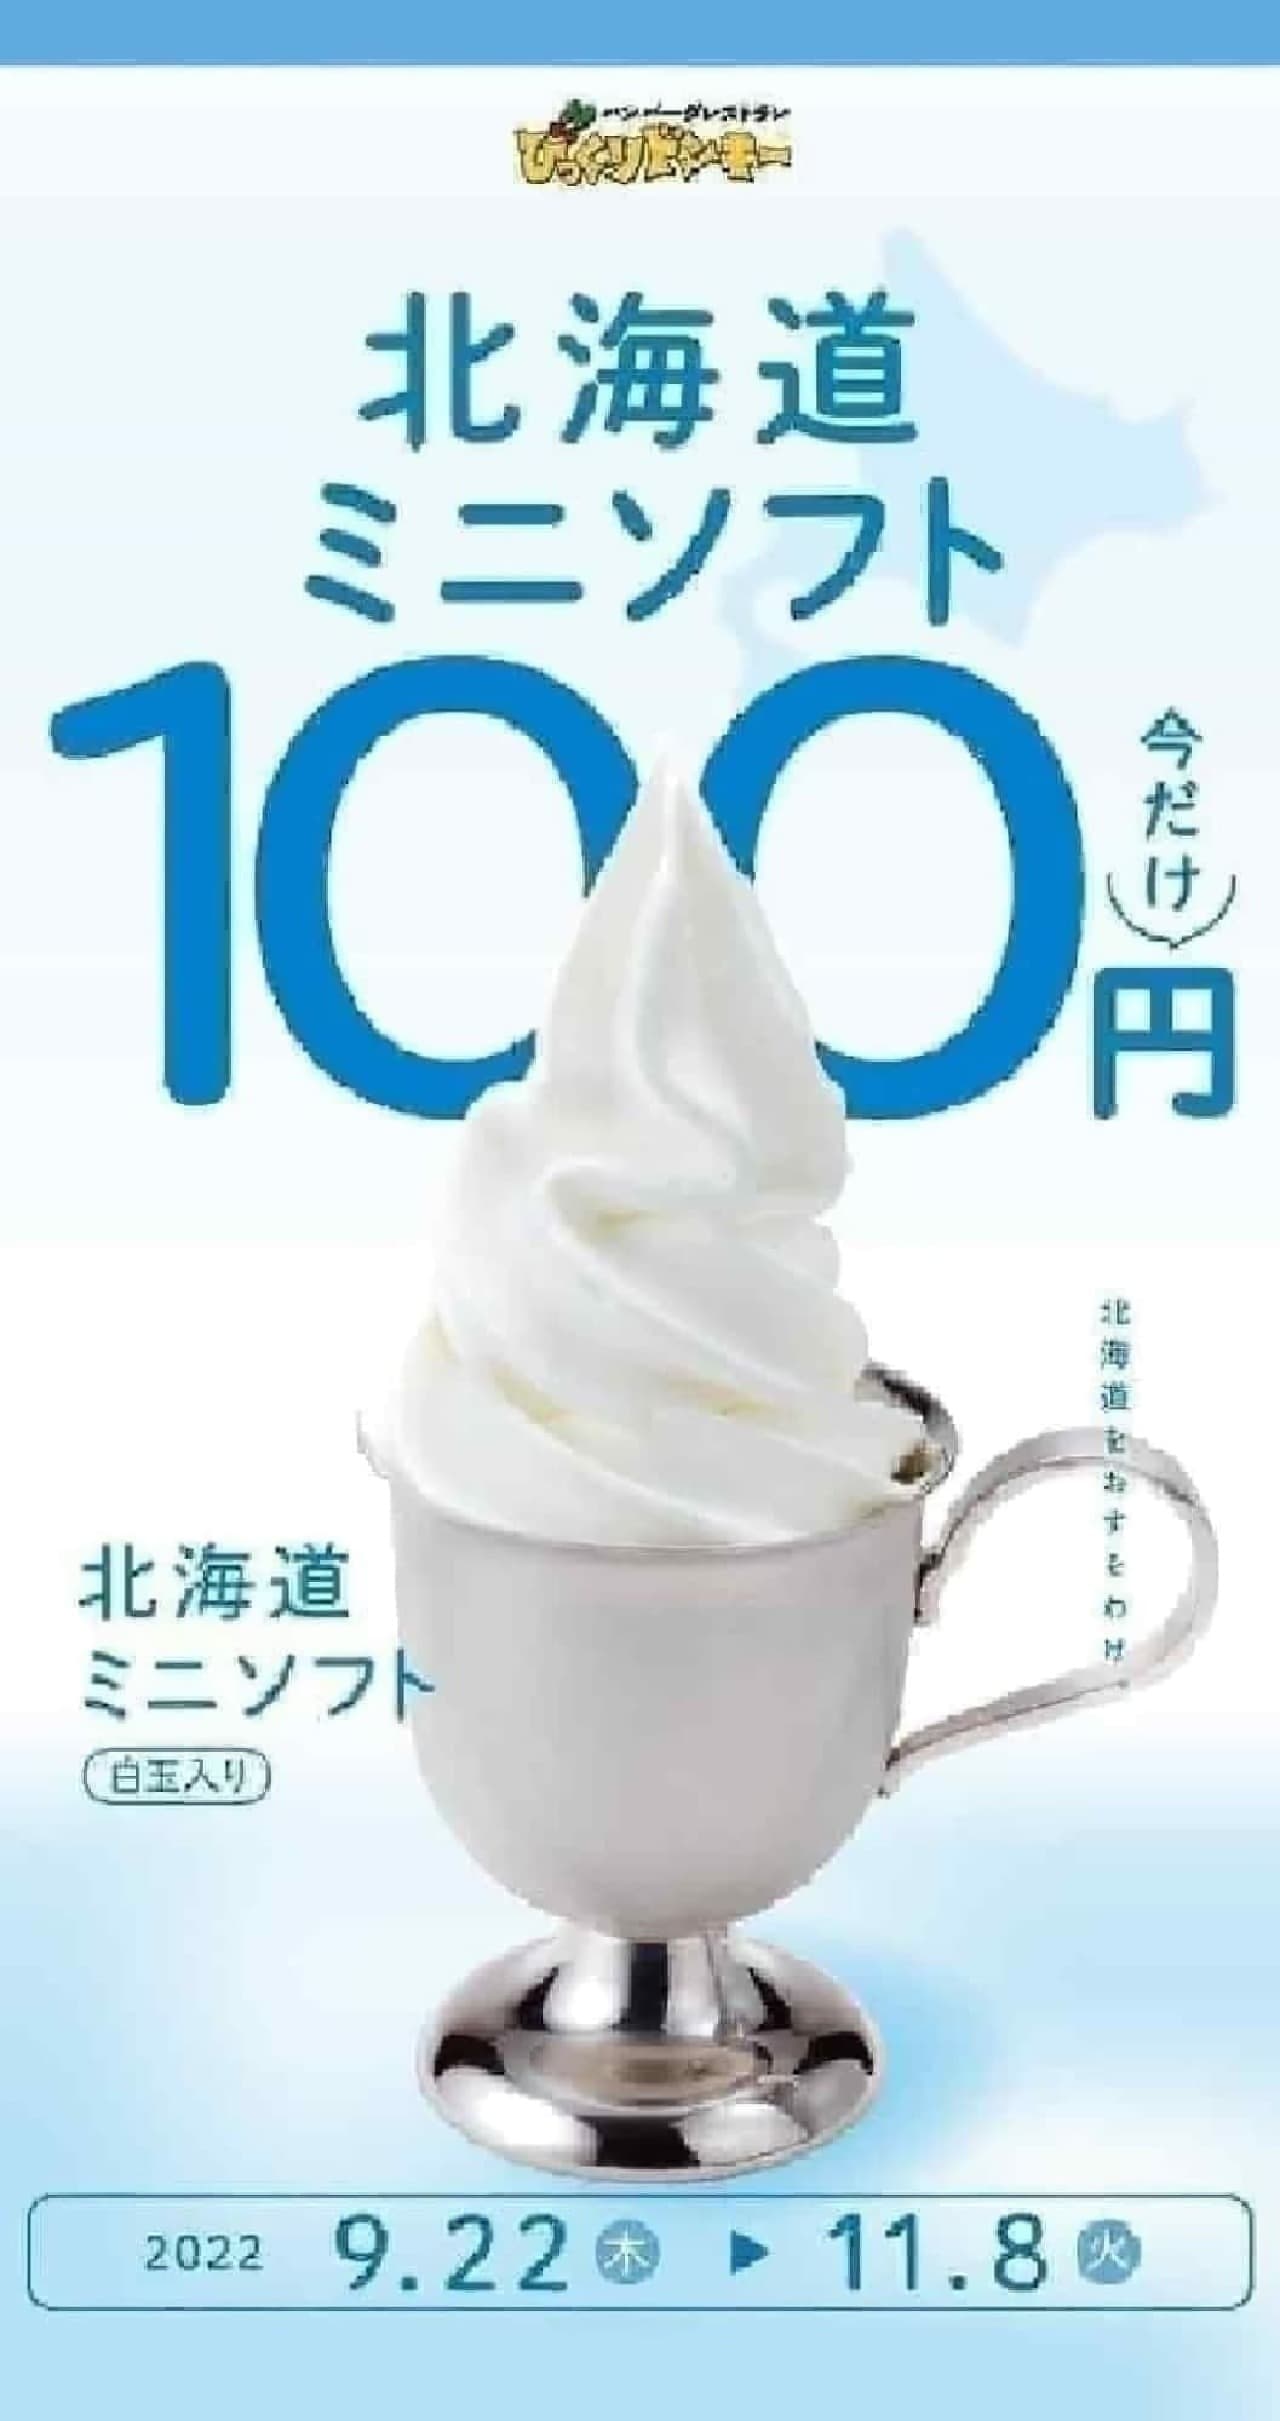 BIKKURI DONKEY "Hokkaido Mini Soft" half price 100 yen